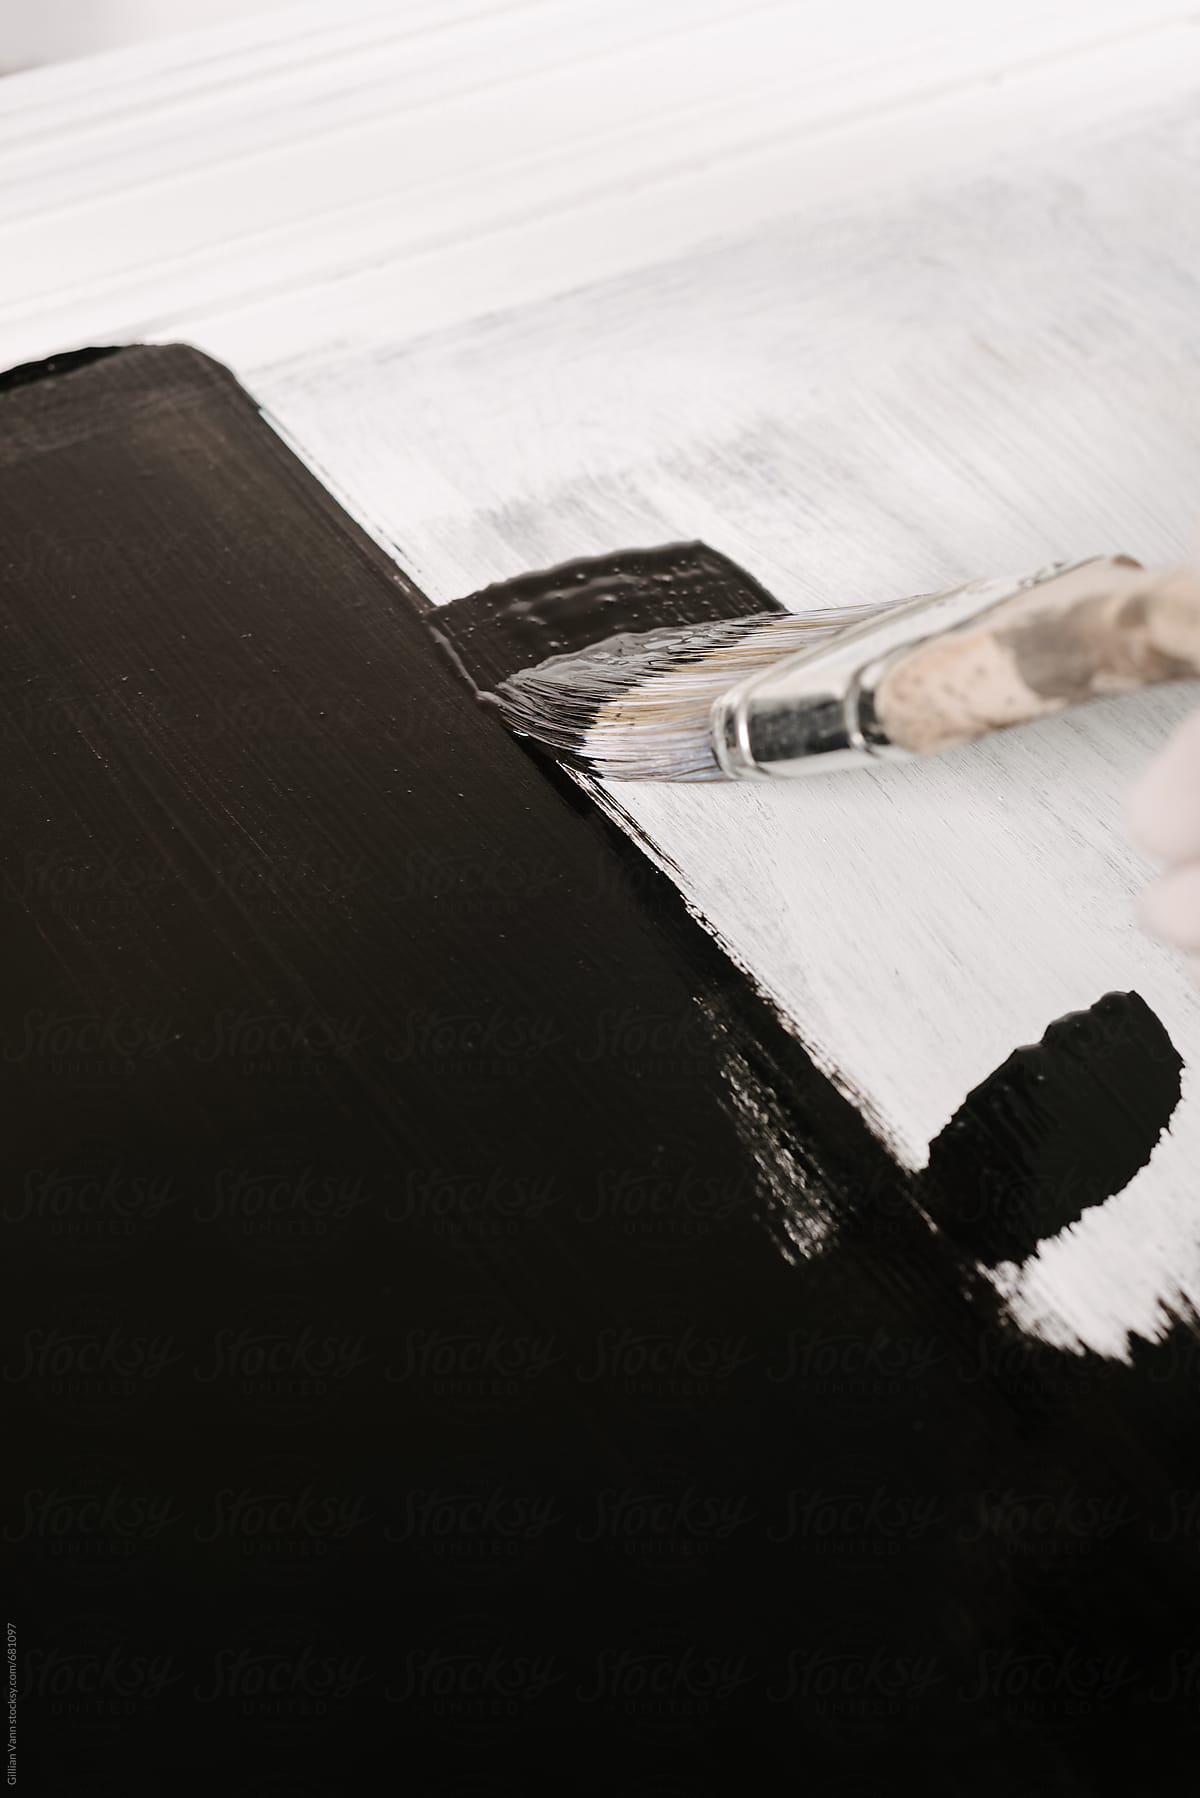 blackboard paint on a brush